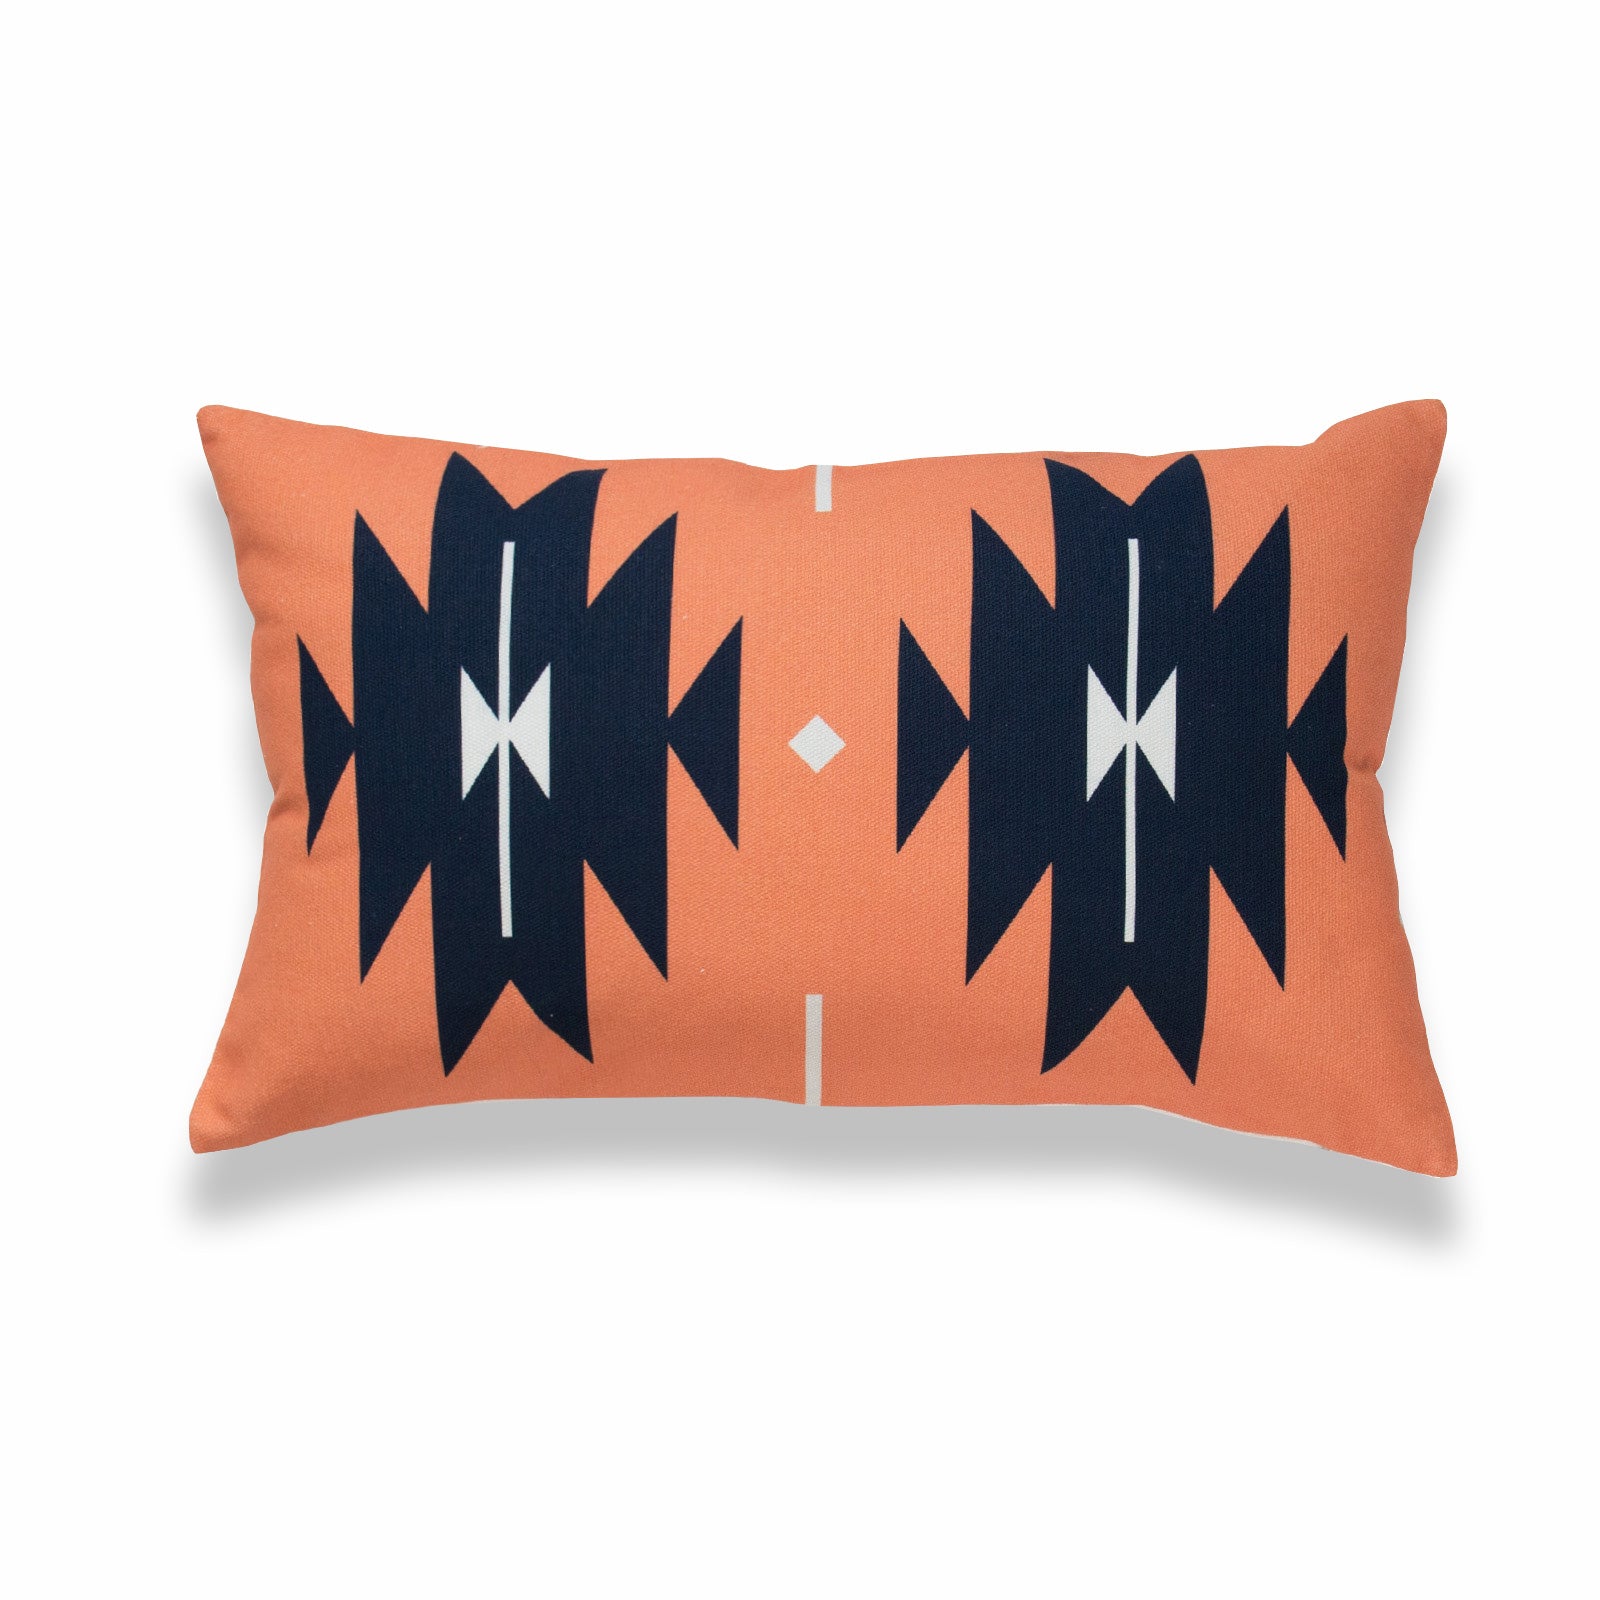 Aztec Print Lumbar Pillow Cover, Diamond, Navy Blue Coral Orange, 12"x20"